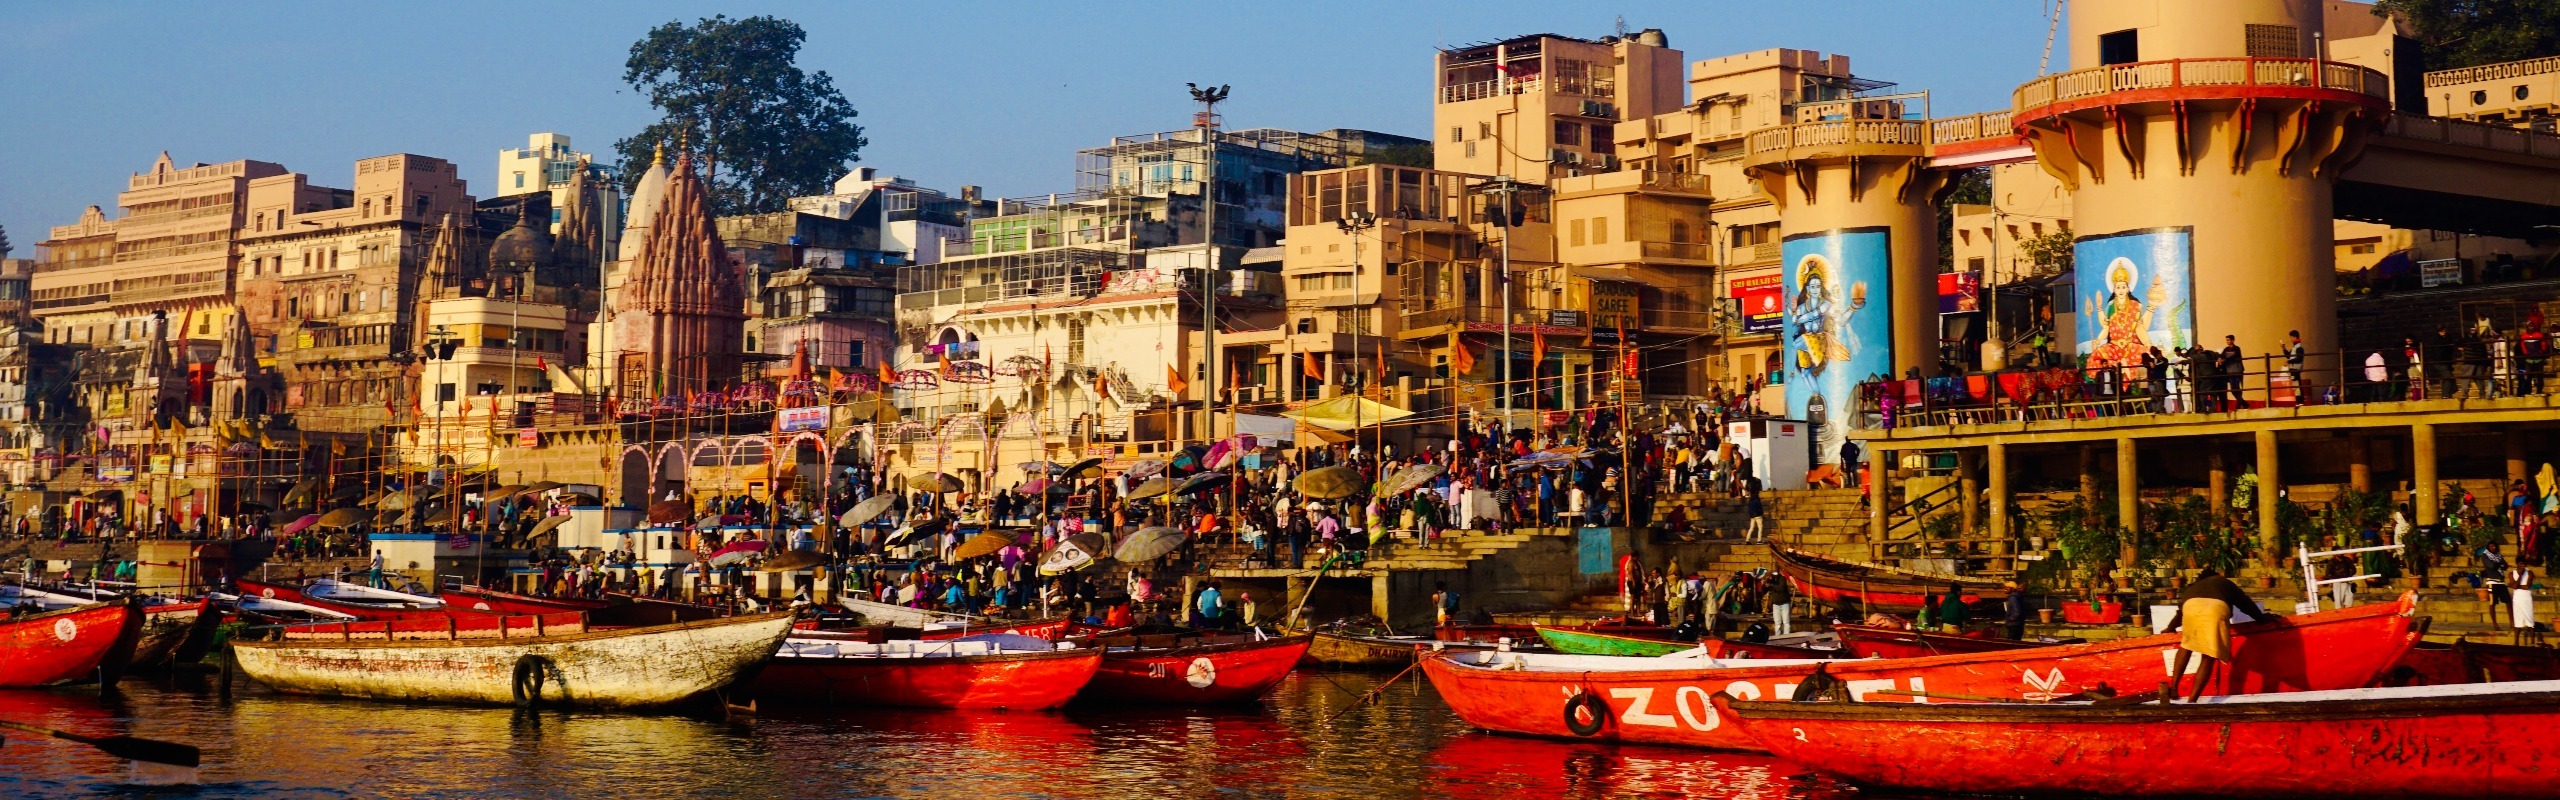 Best (and Worst) Times to Visit Varanasi & Rainy Season